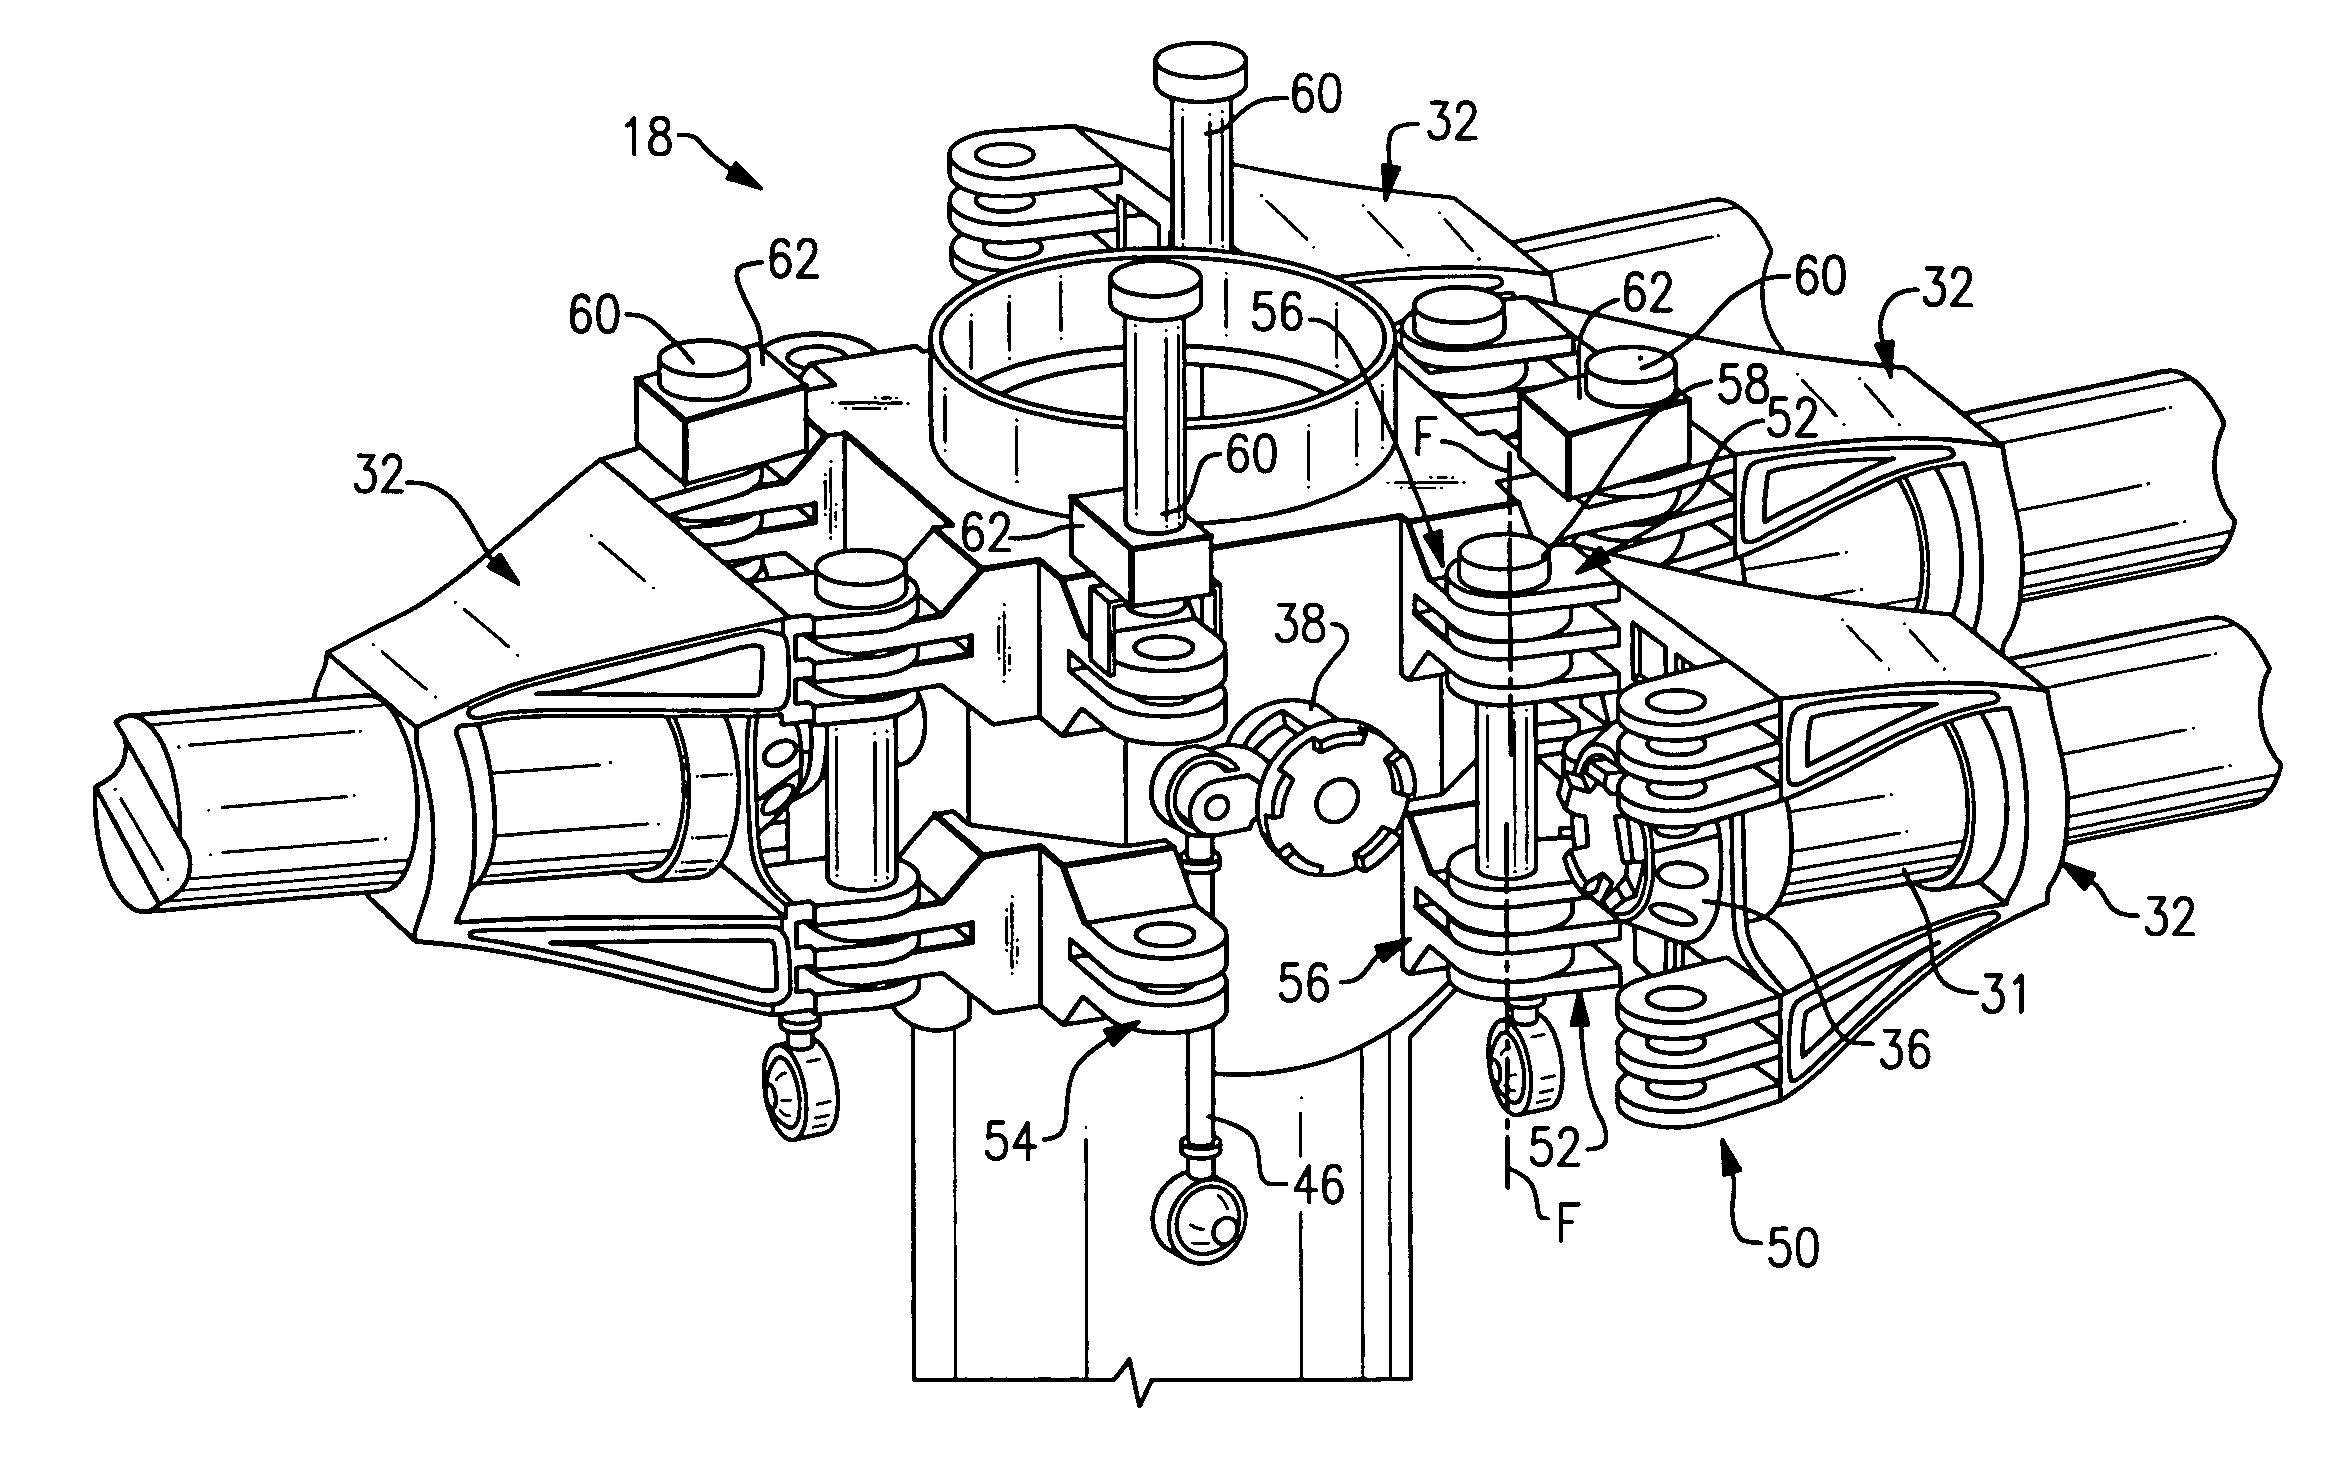 Rotor blade folding system